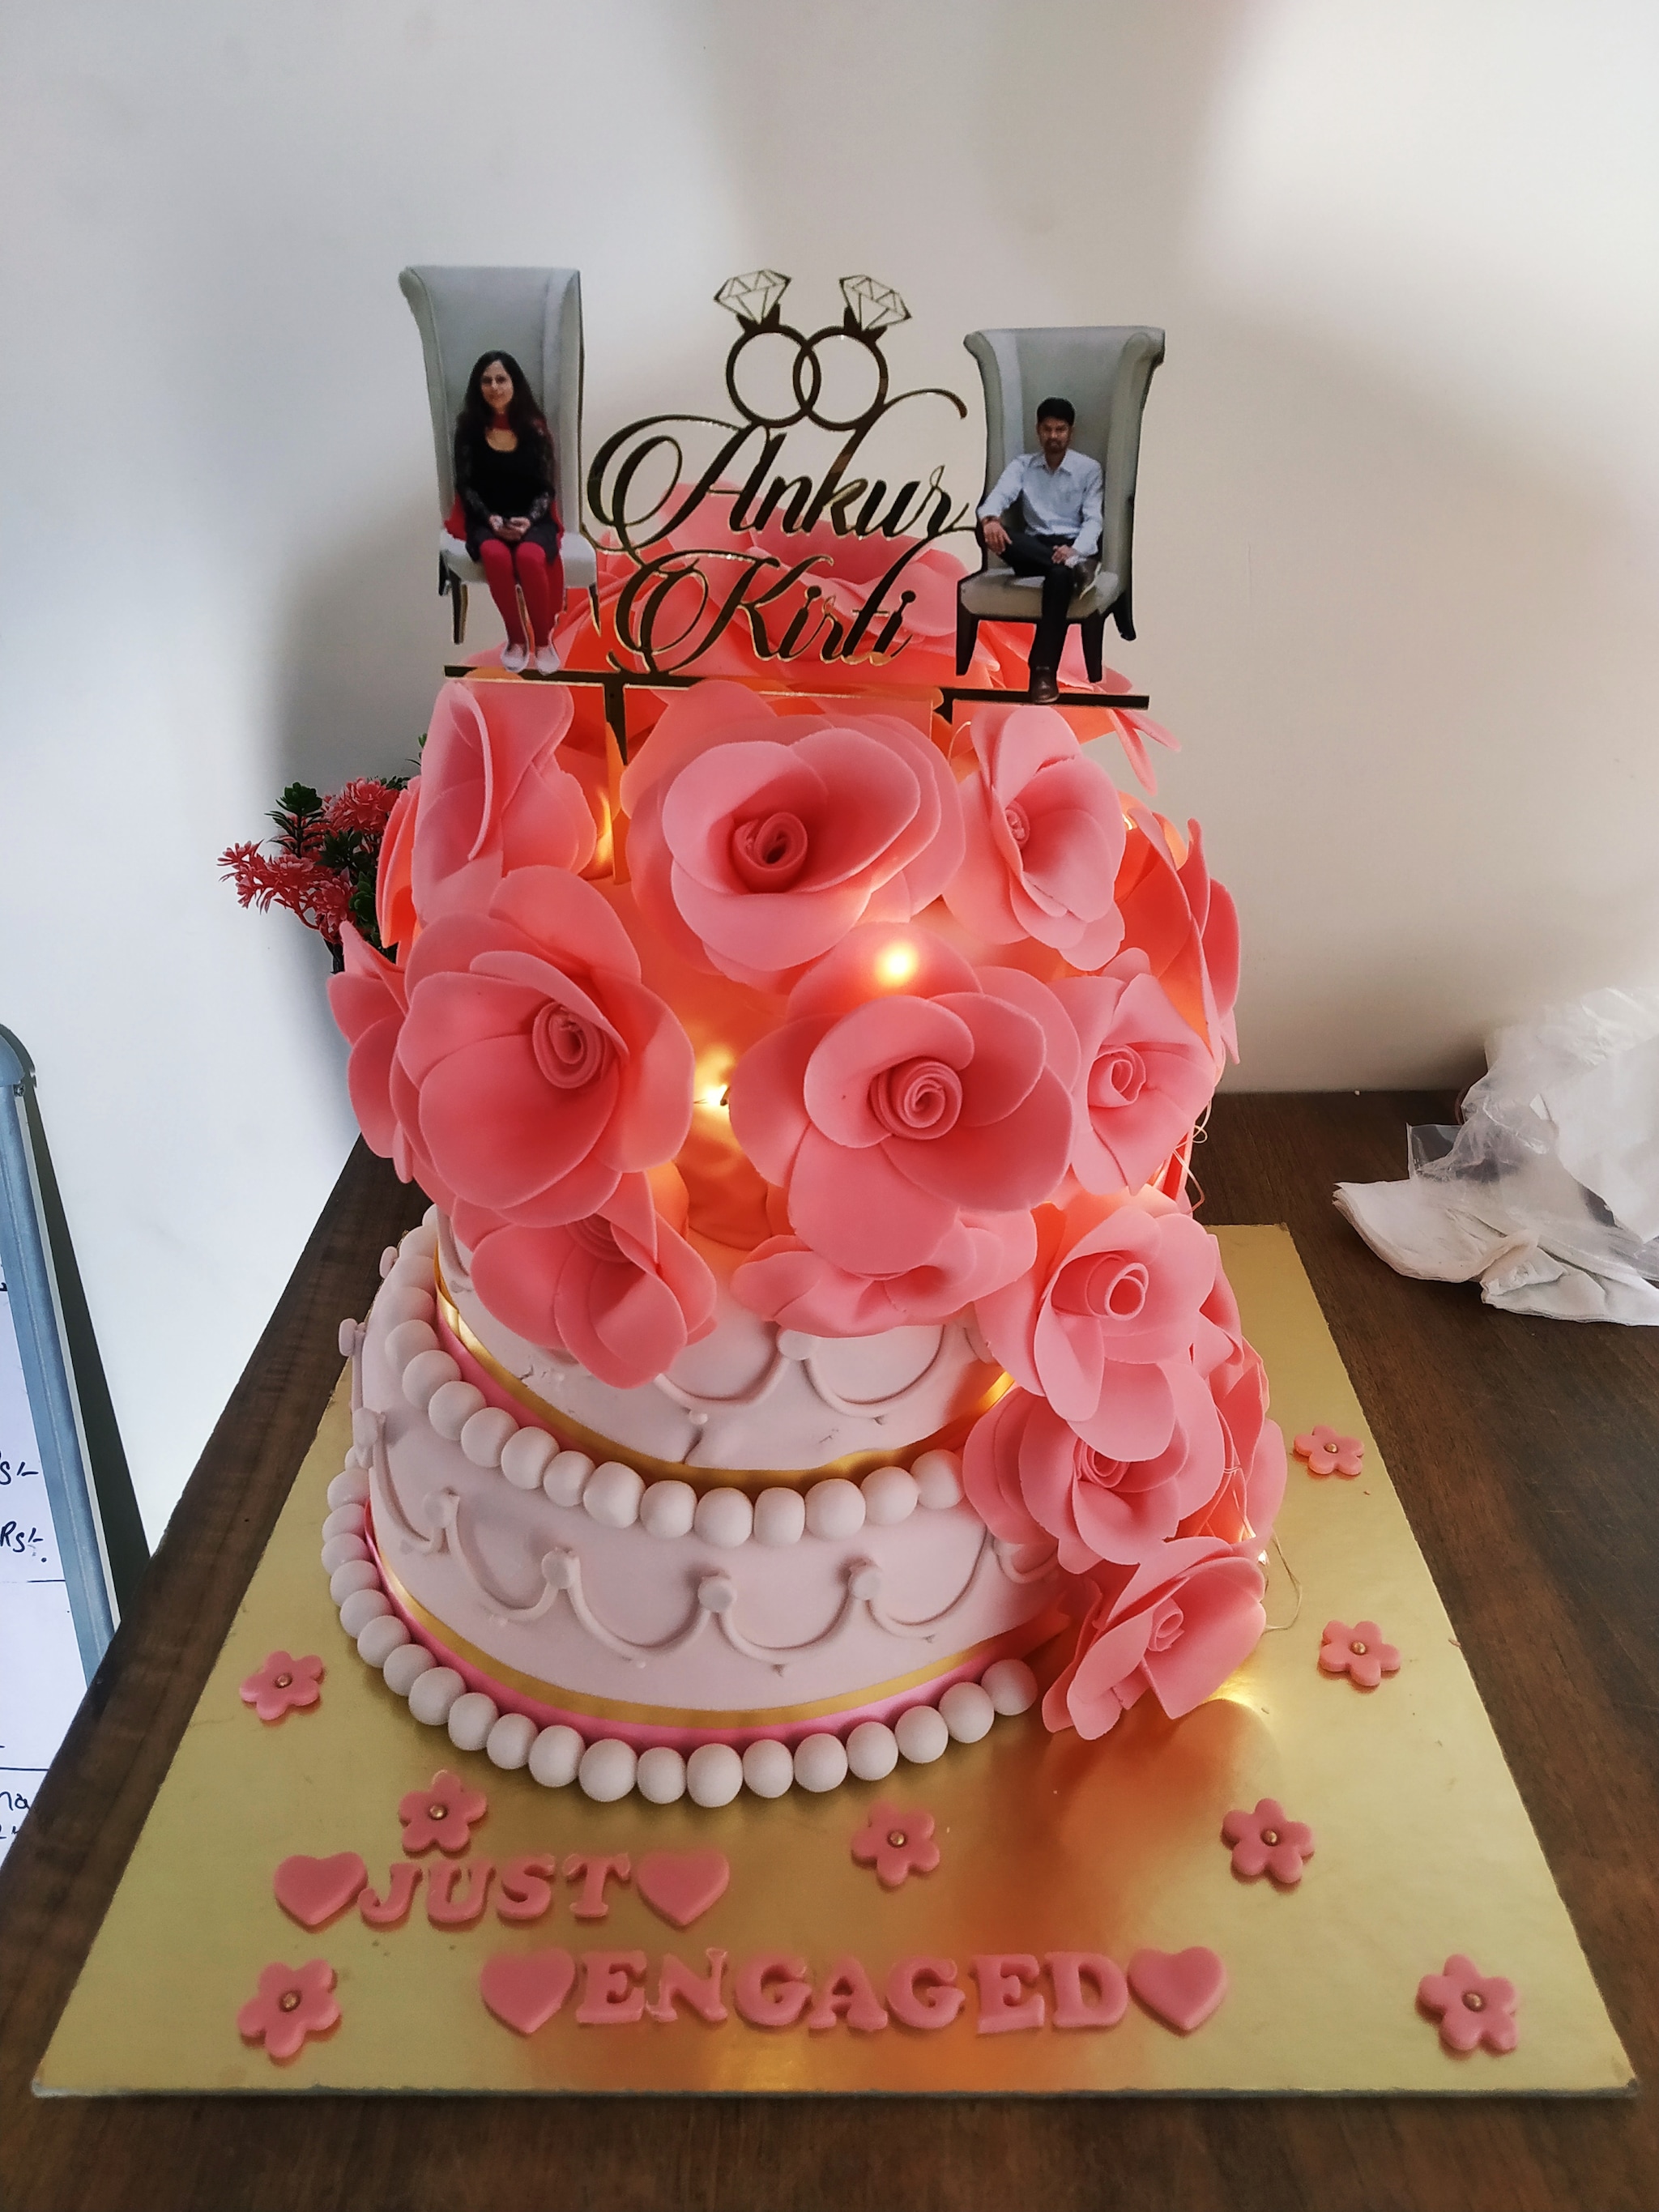 Firangiees The Baked Treat on LinkedIn: #cakeboss #cakelove  #cakesofinstagram #cakesbae #chocolate…